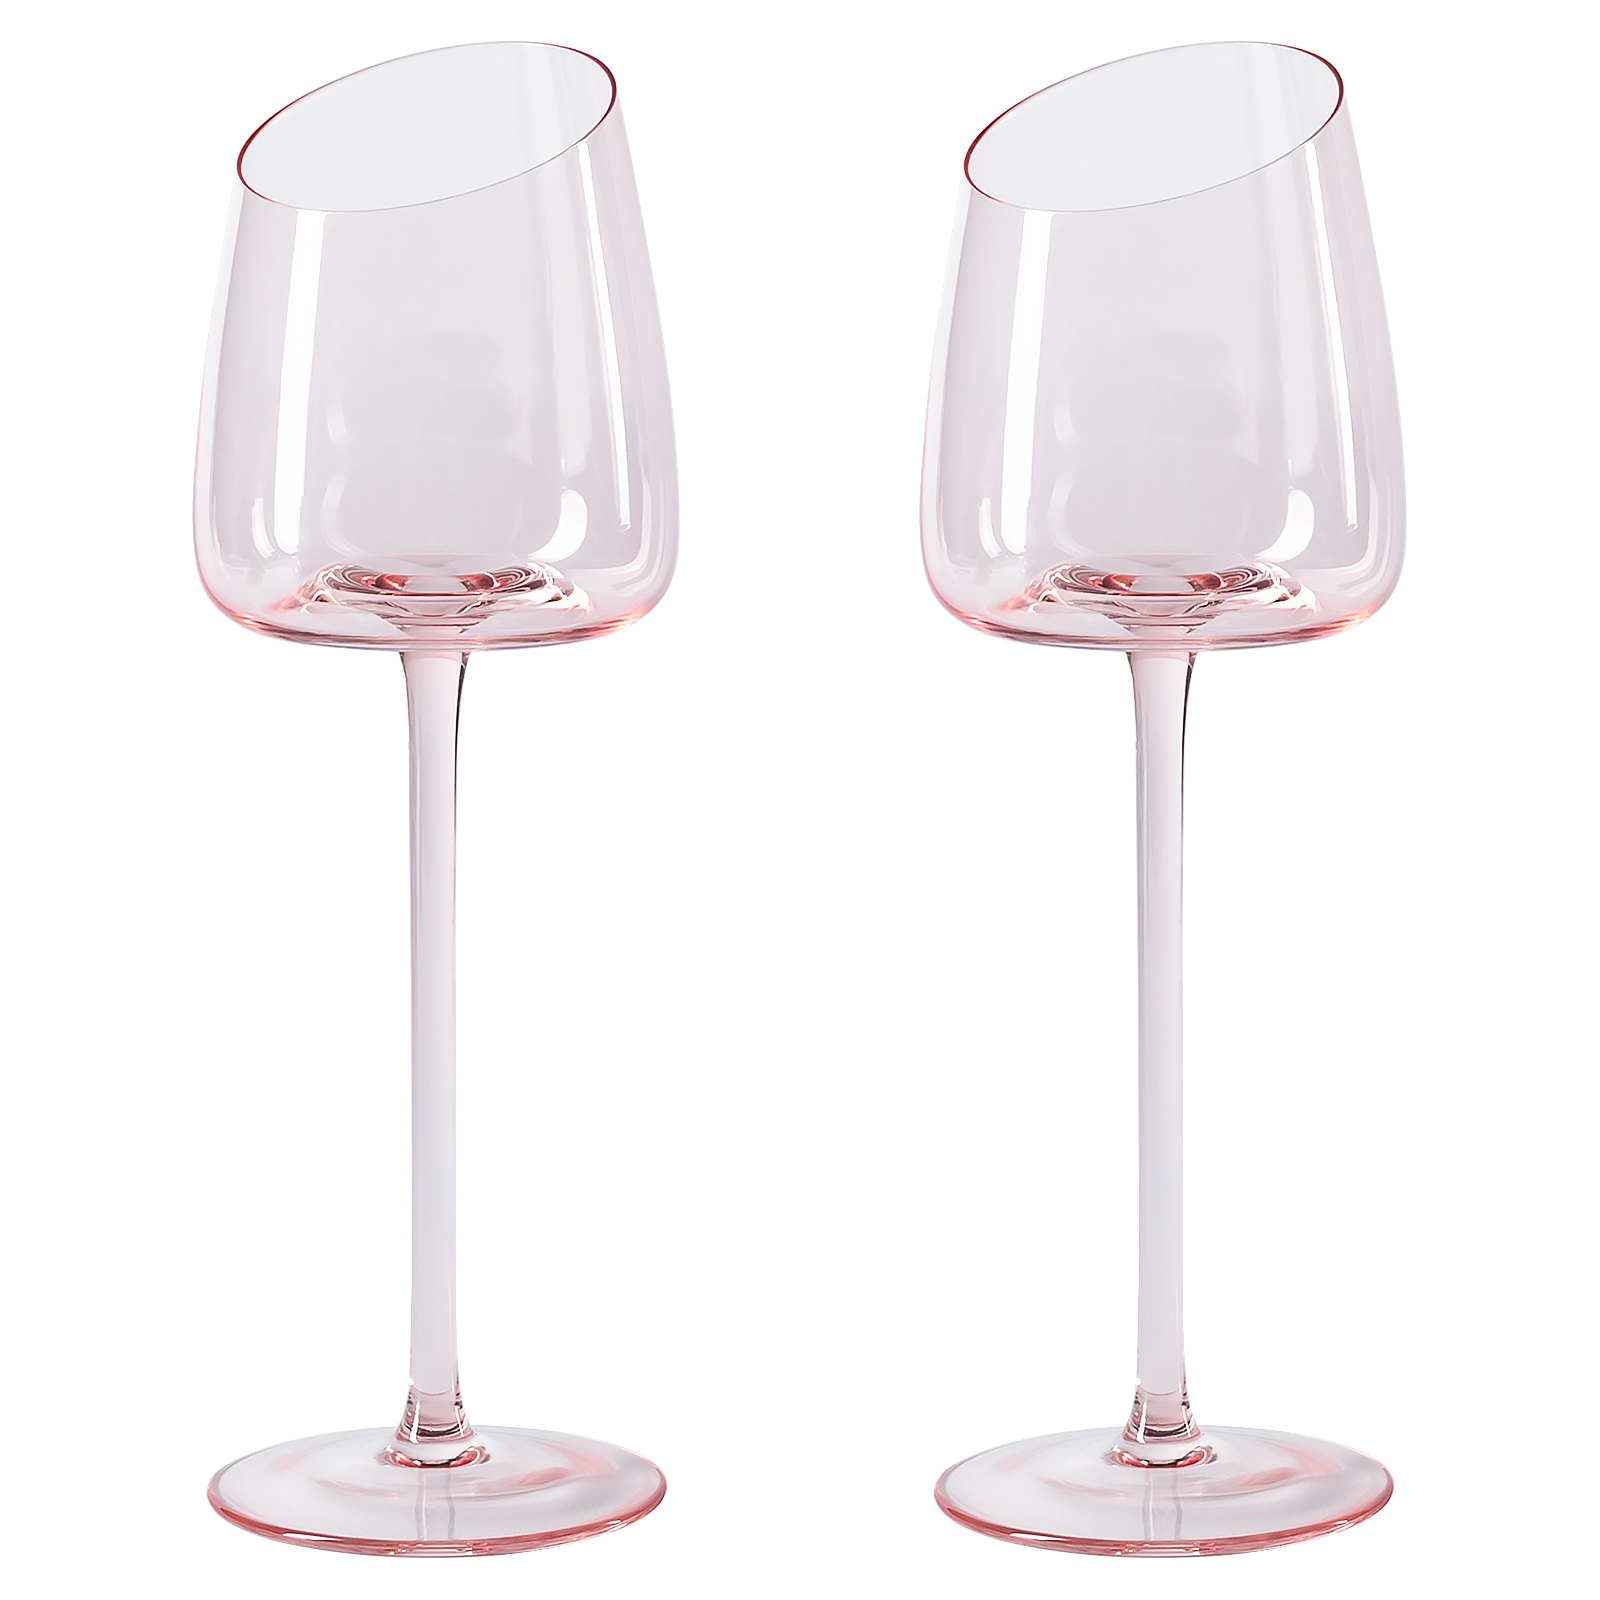 VENTRAY Home 法式粉水晶勃艮第红酒杯无铅高级水晶香槟杯长柄斜口红酒杯,2 只装,礼盒装,红酒杯